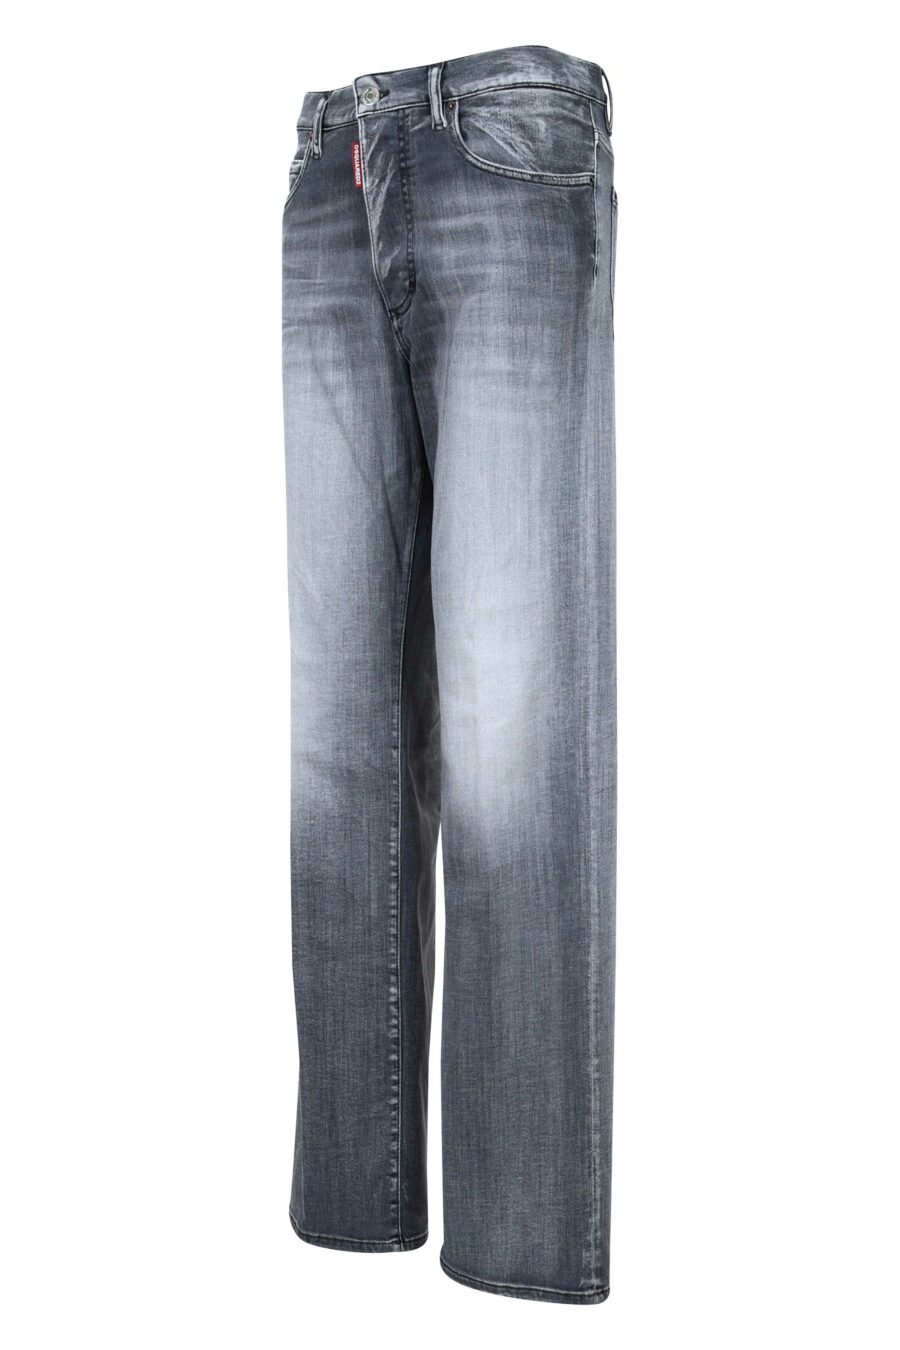 Jeans "San Diego jean" noir usé - 8054148230845 1